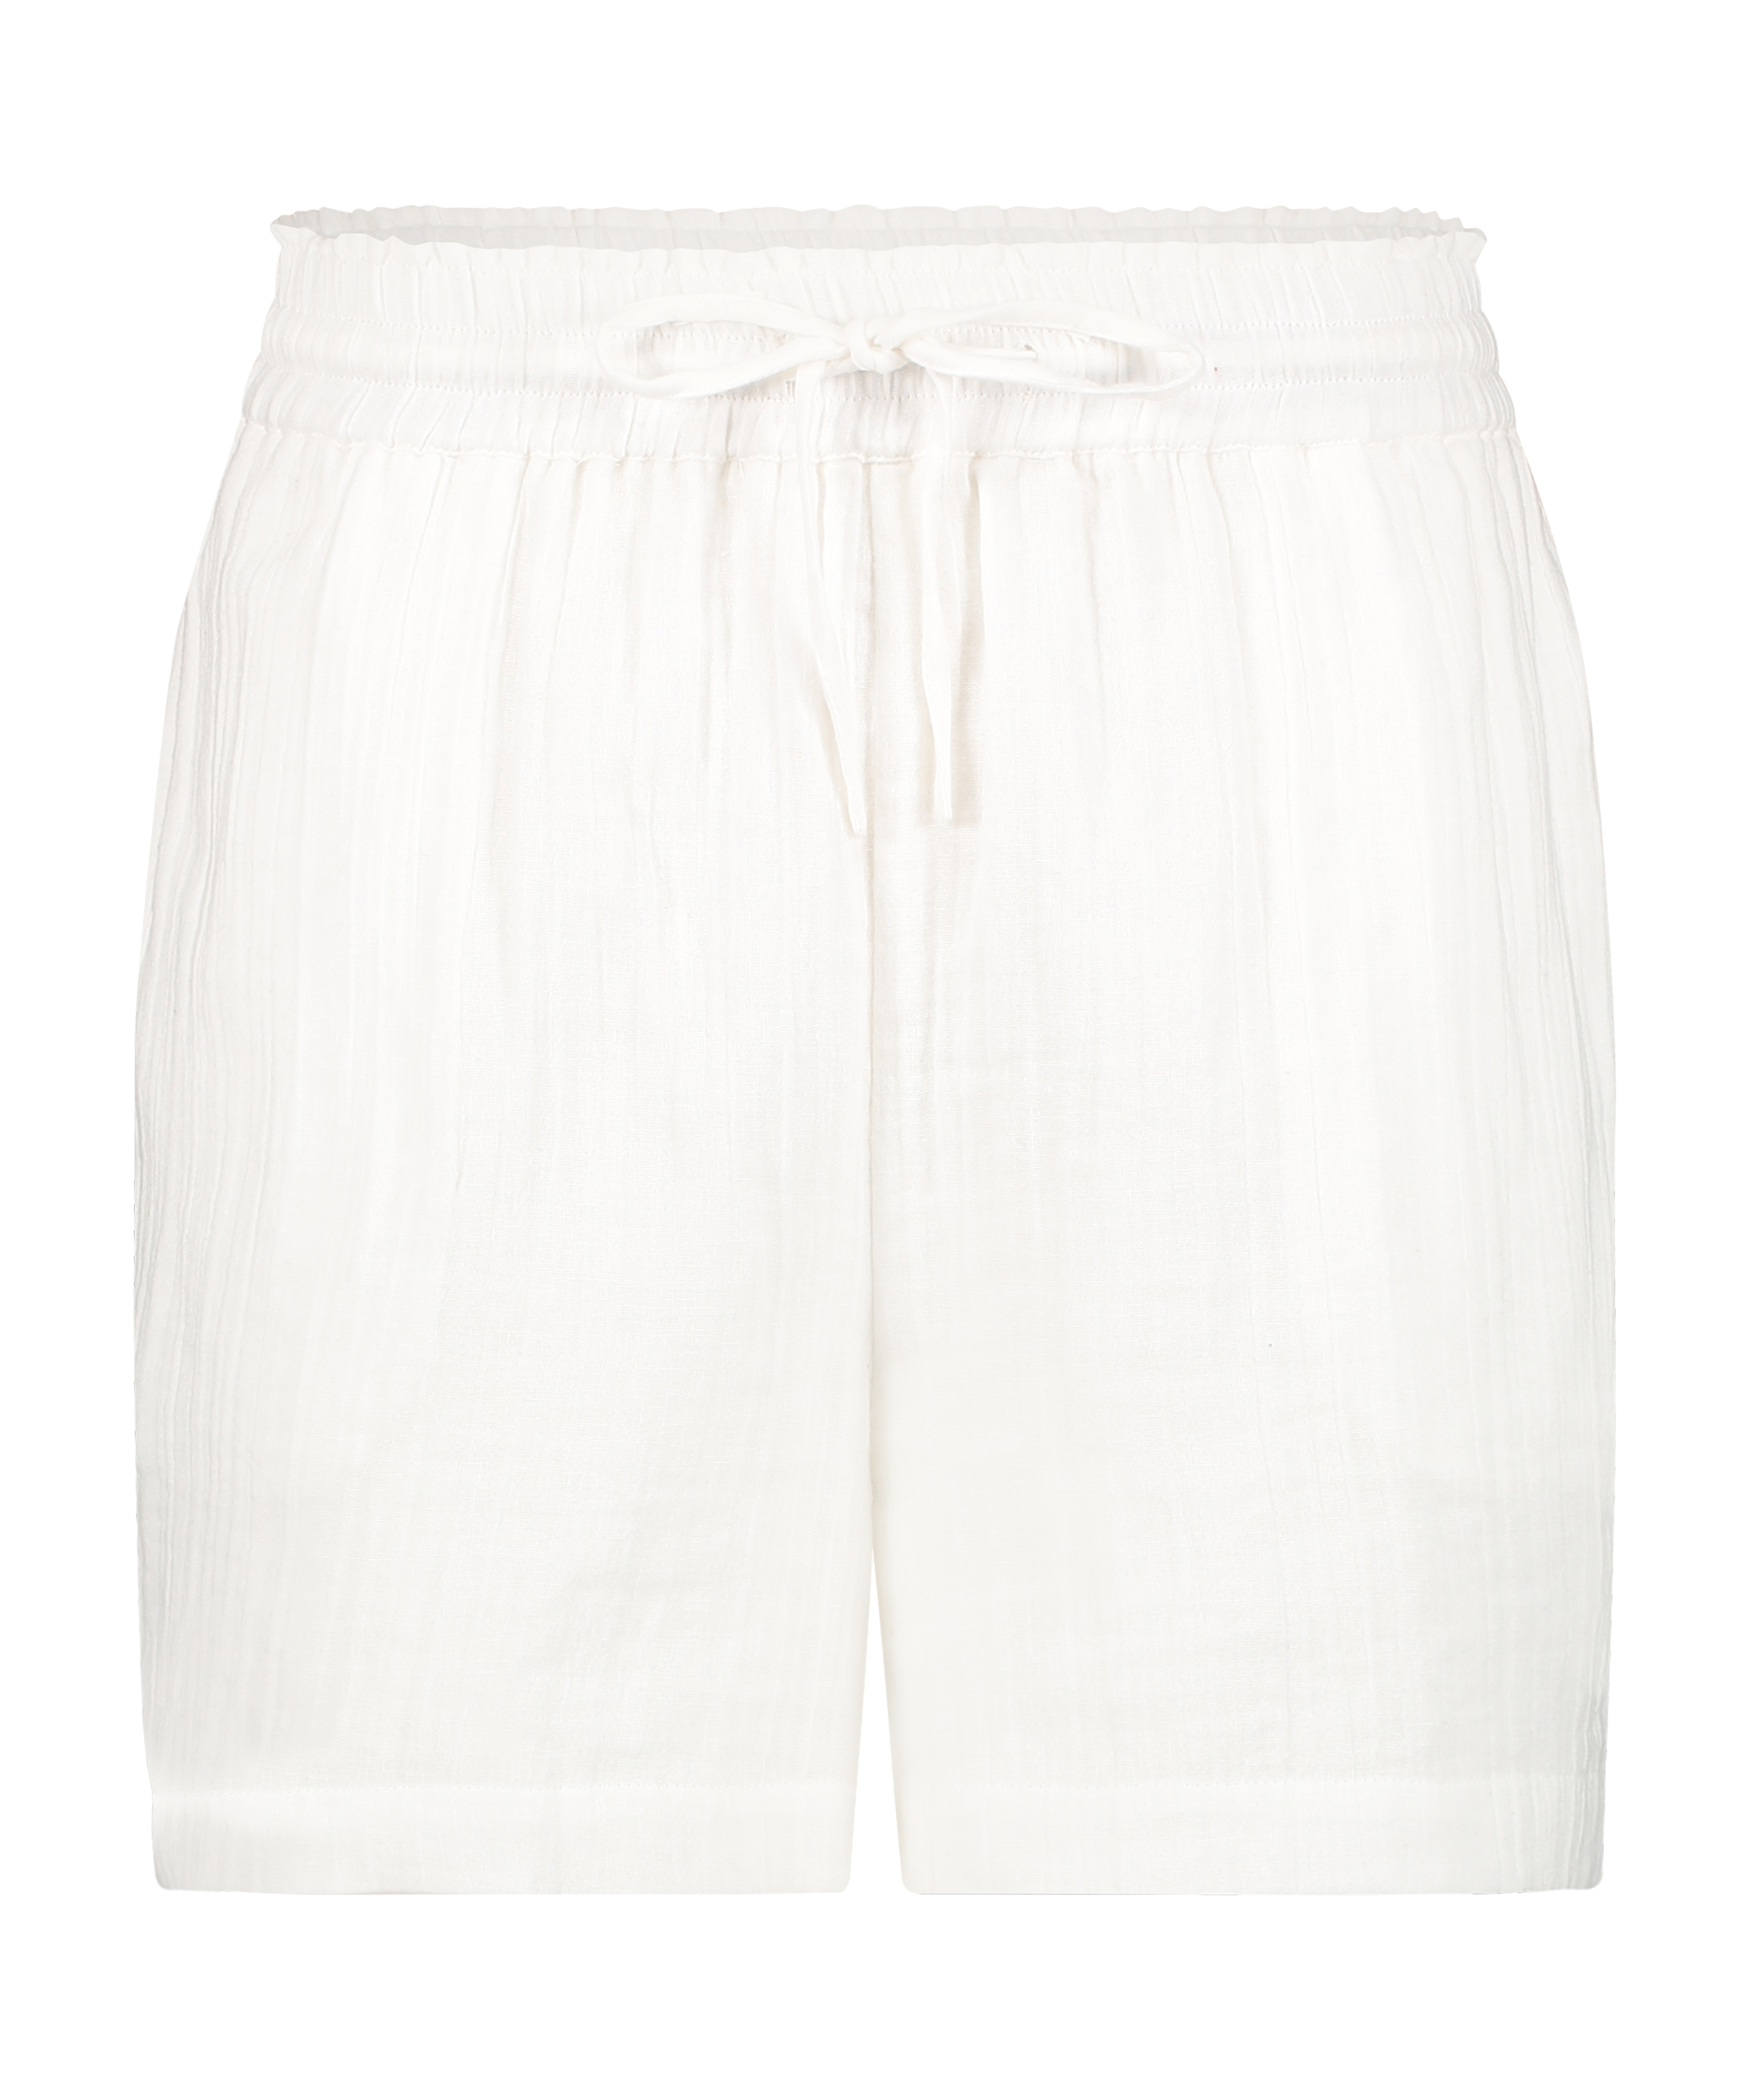 Juna shorts, White, main